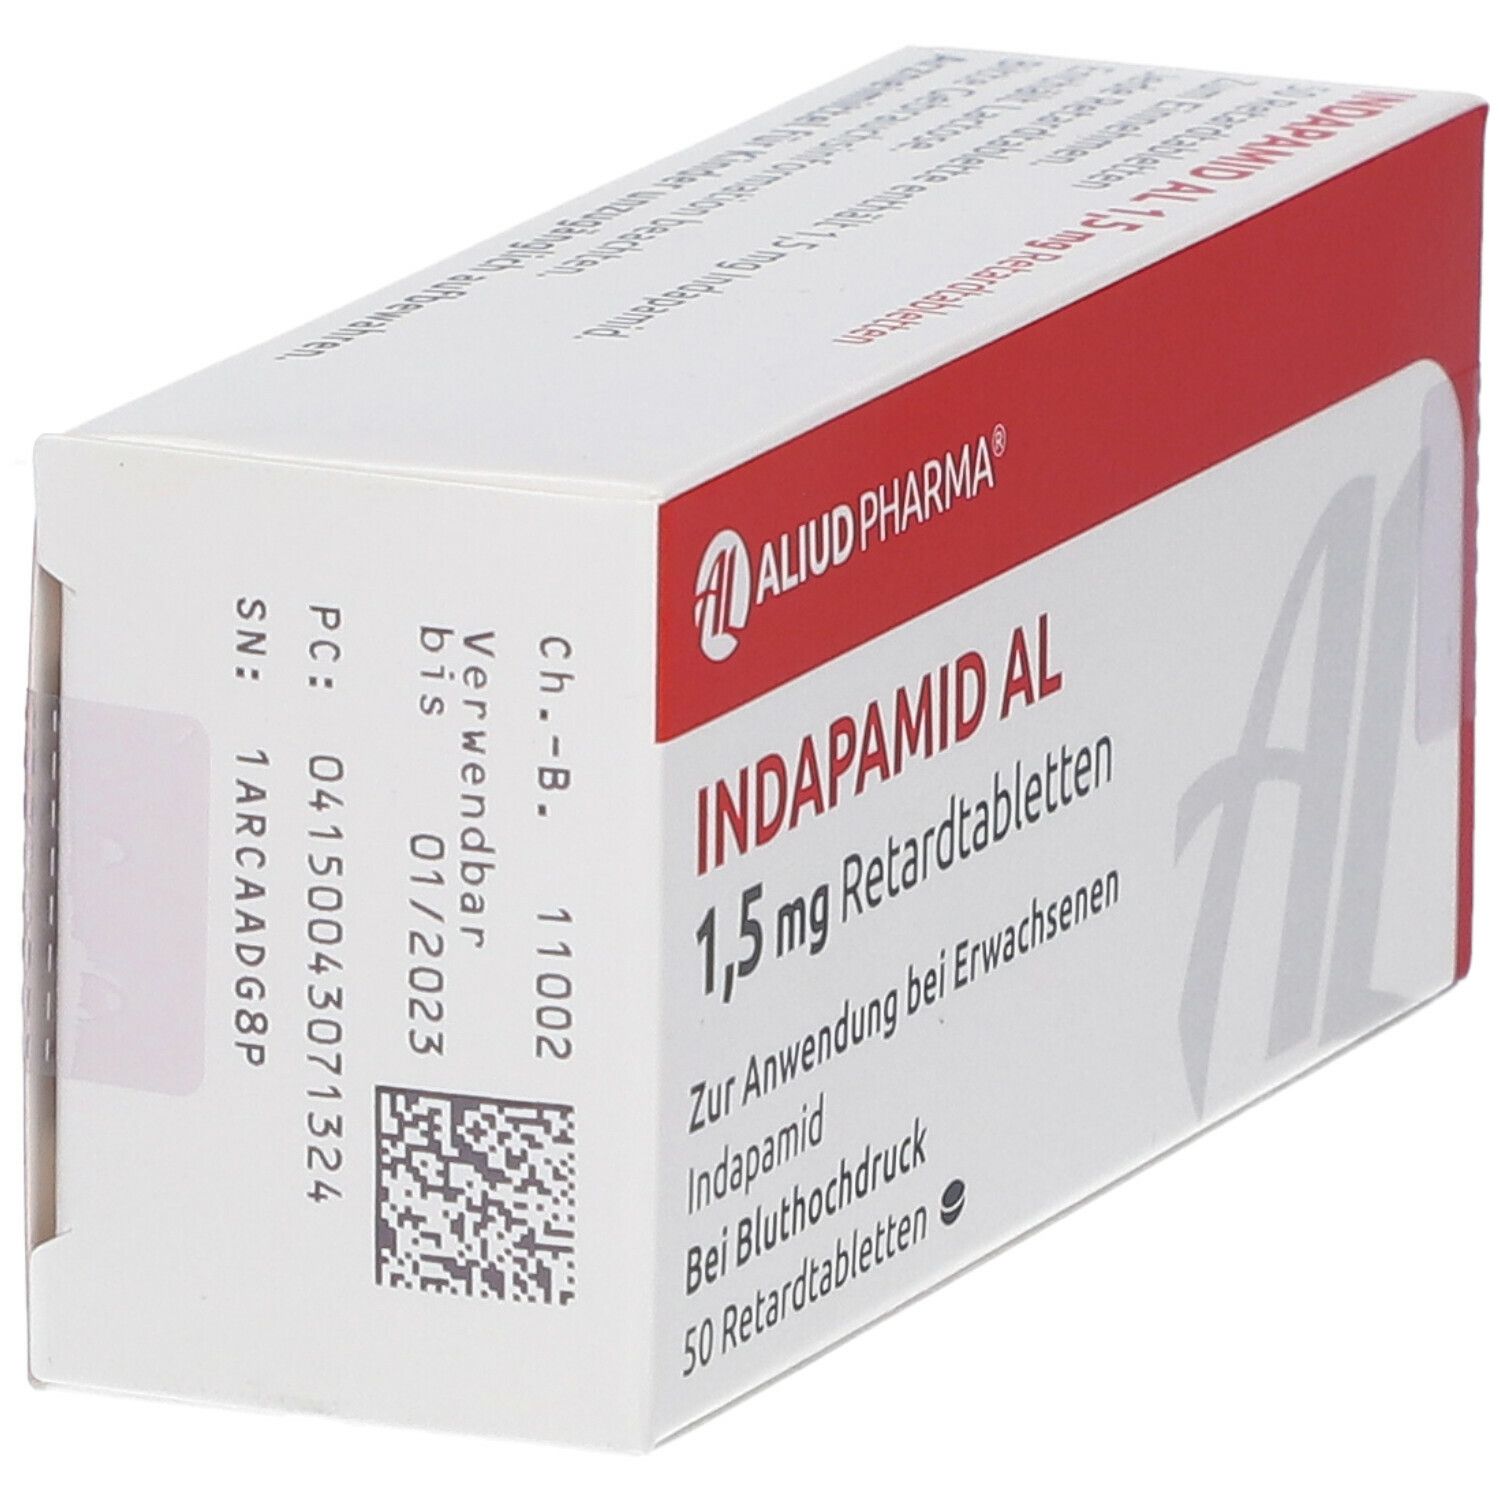 Indapamid AL 1,5 mg